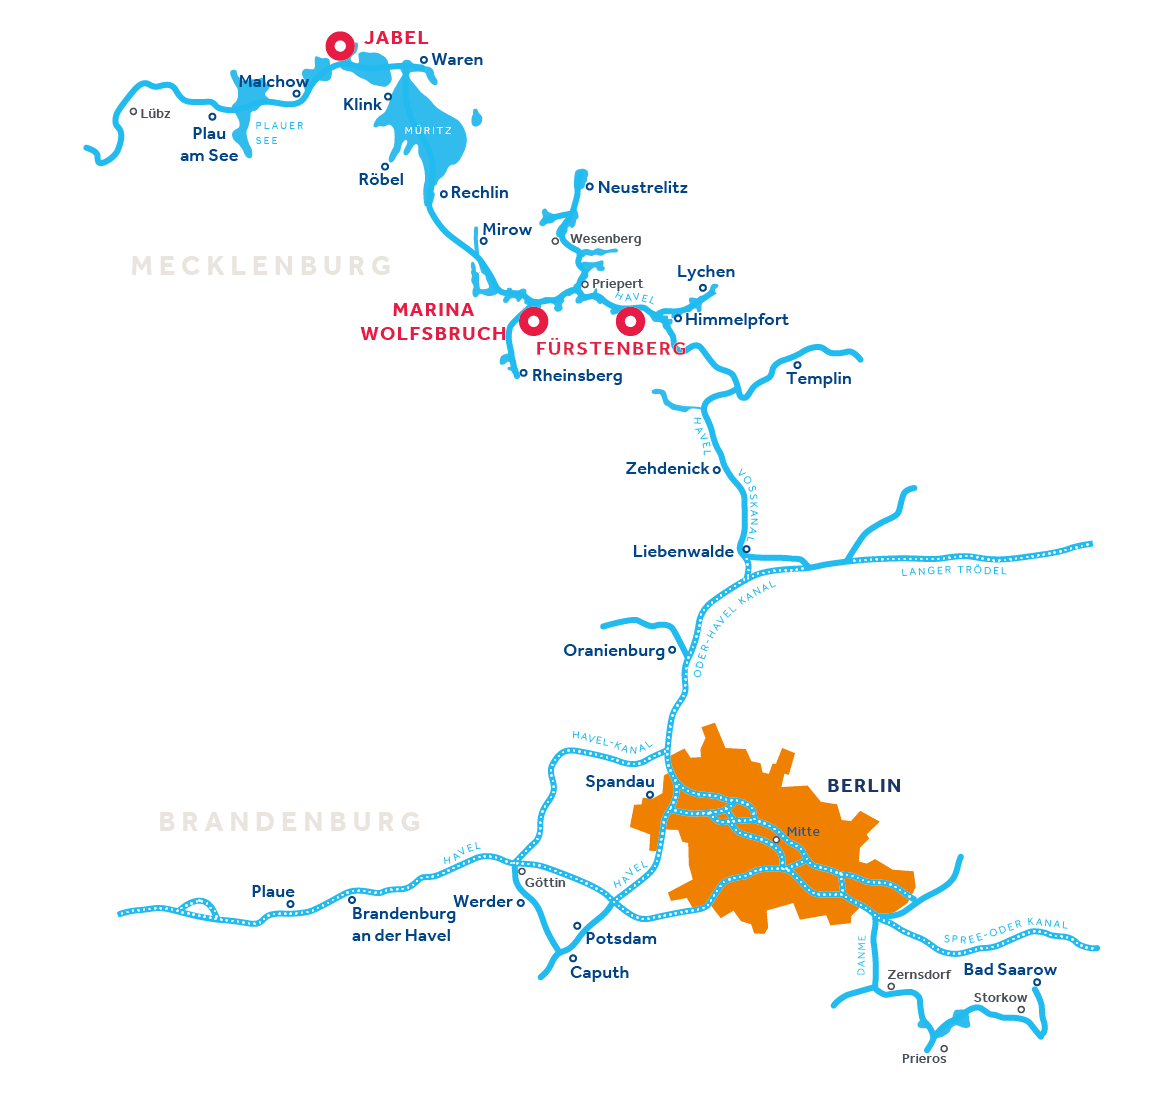 Mecklenburg and Brandenburg regional map